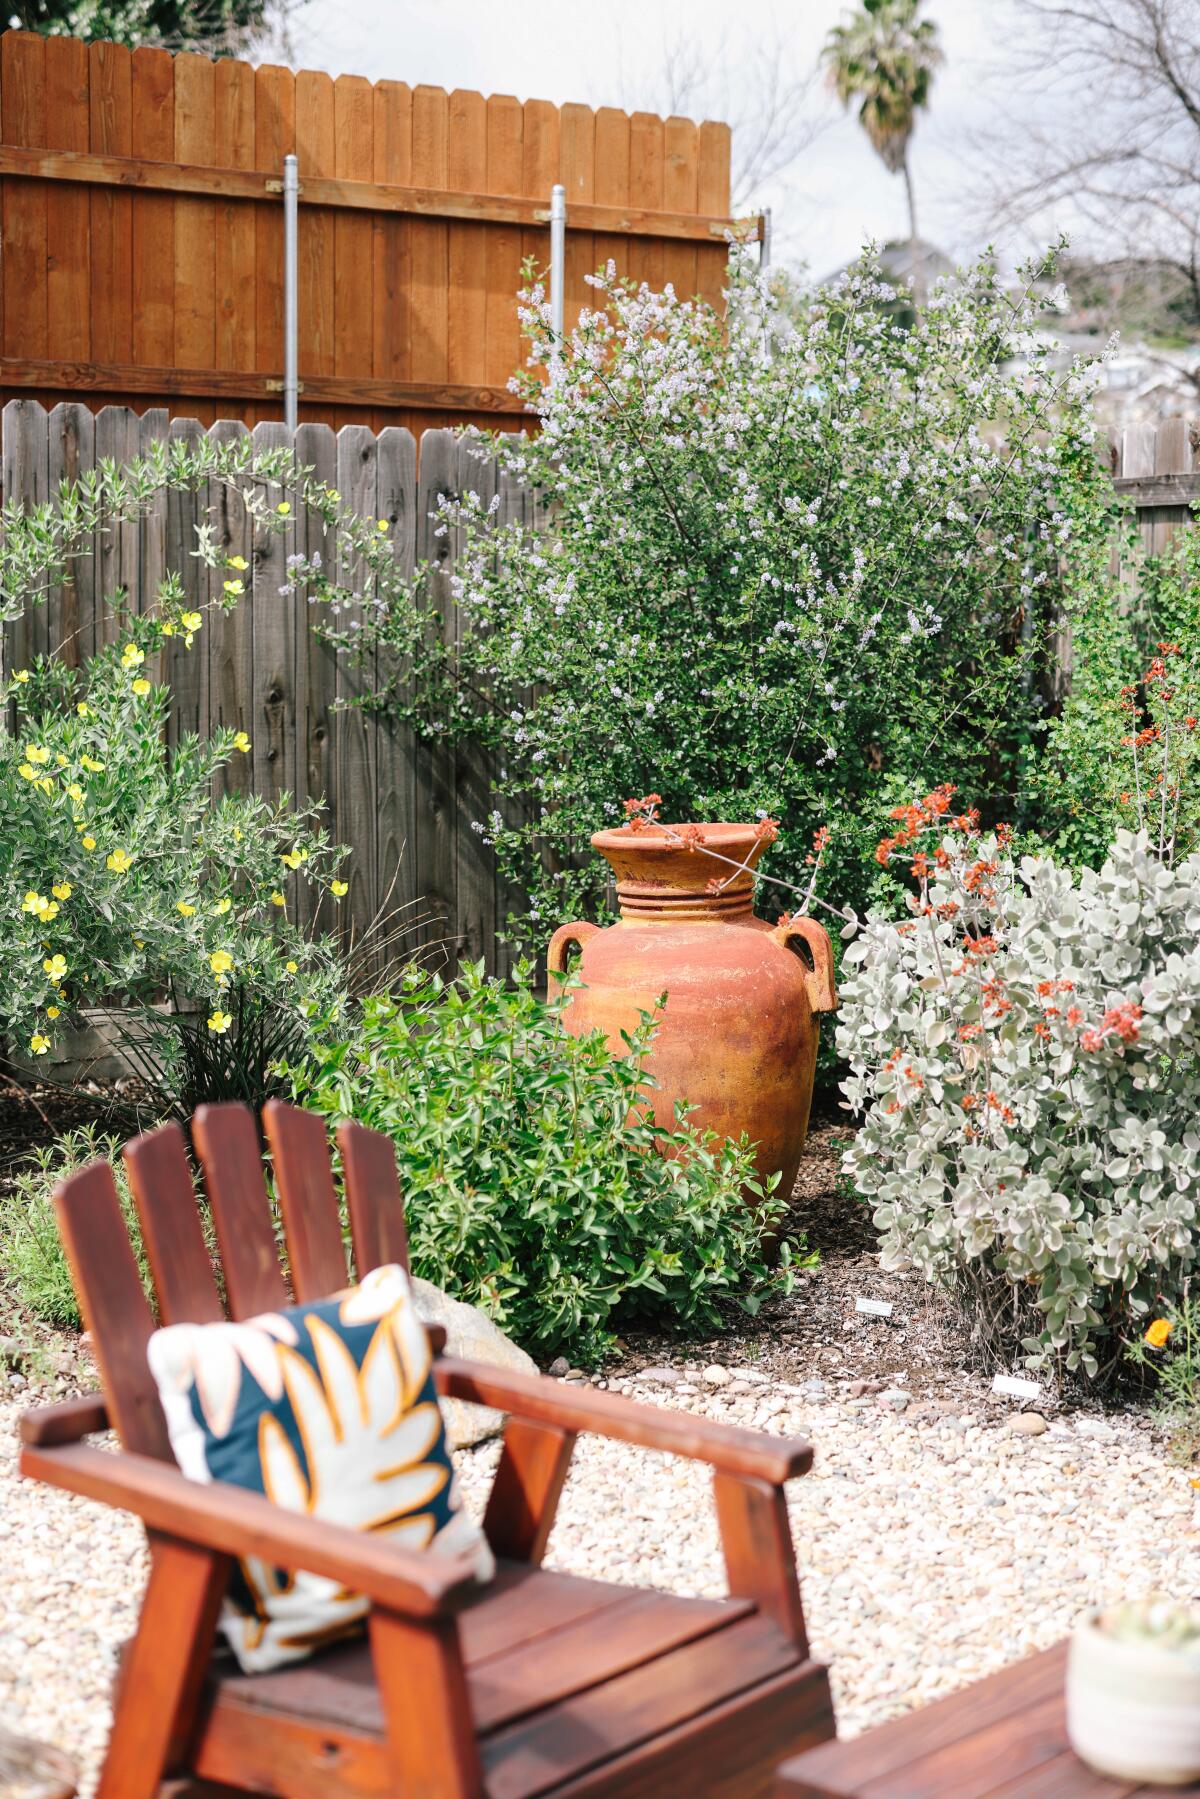 Native plants growing around a large terracotta pot near an Adirondack chair in a backyard.